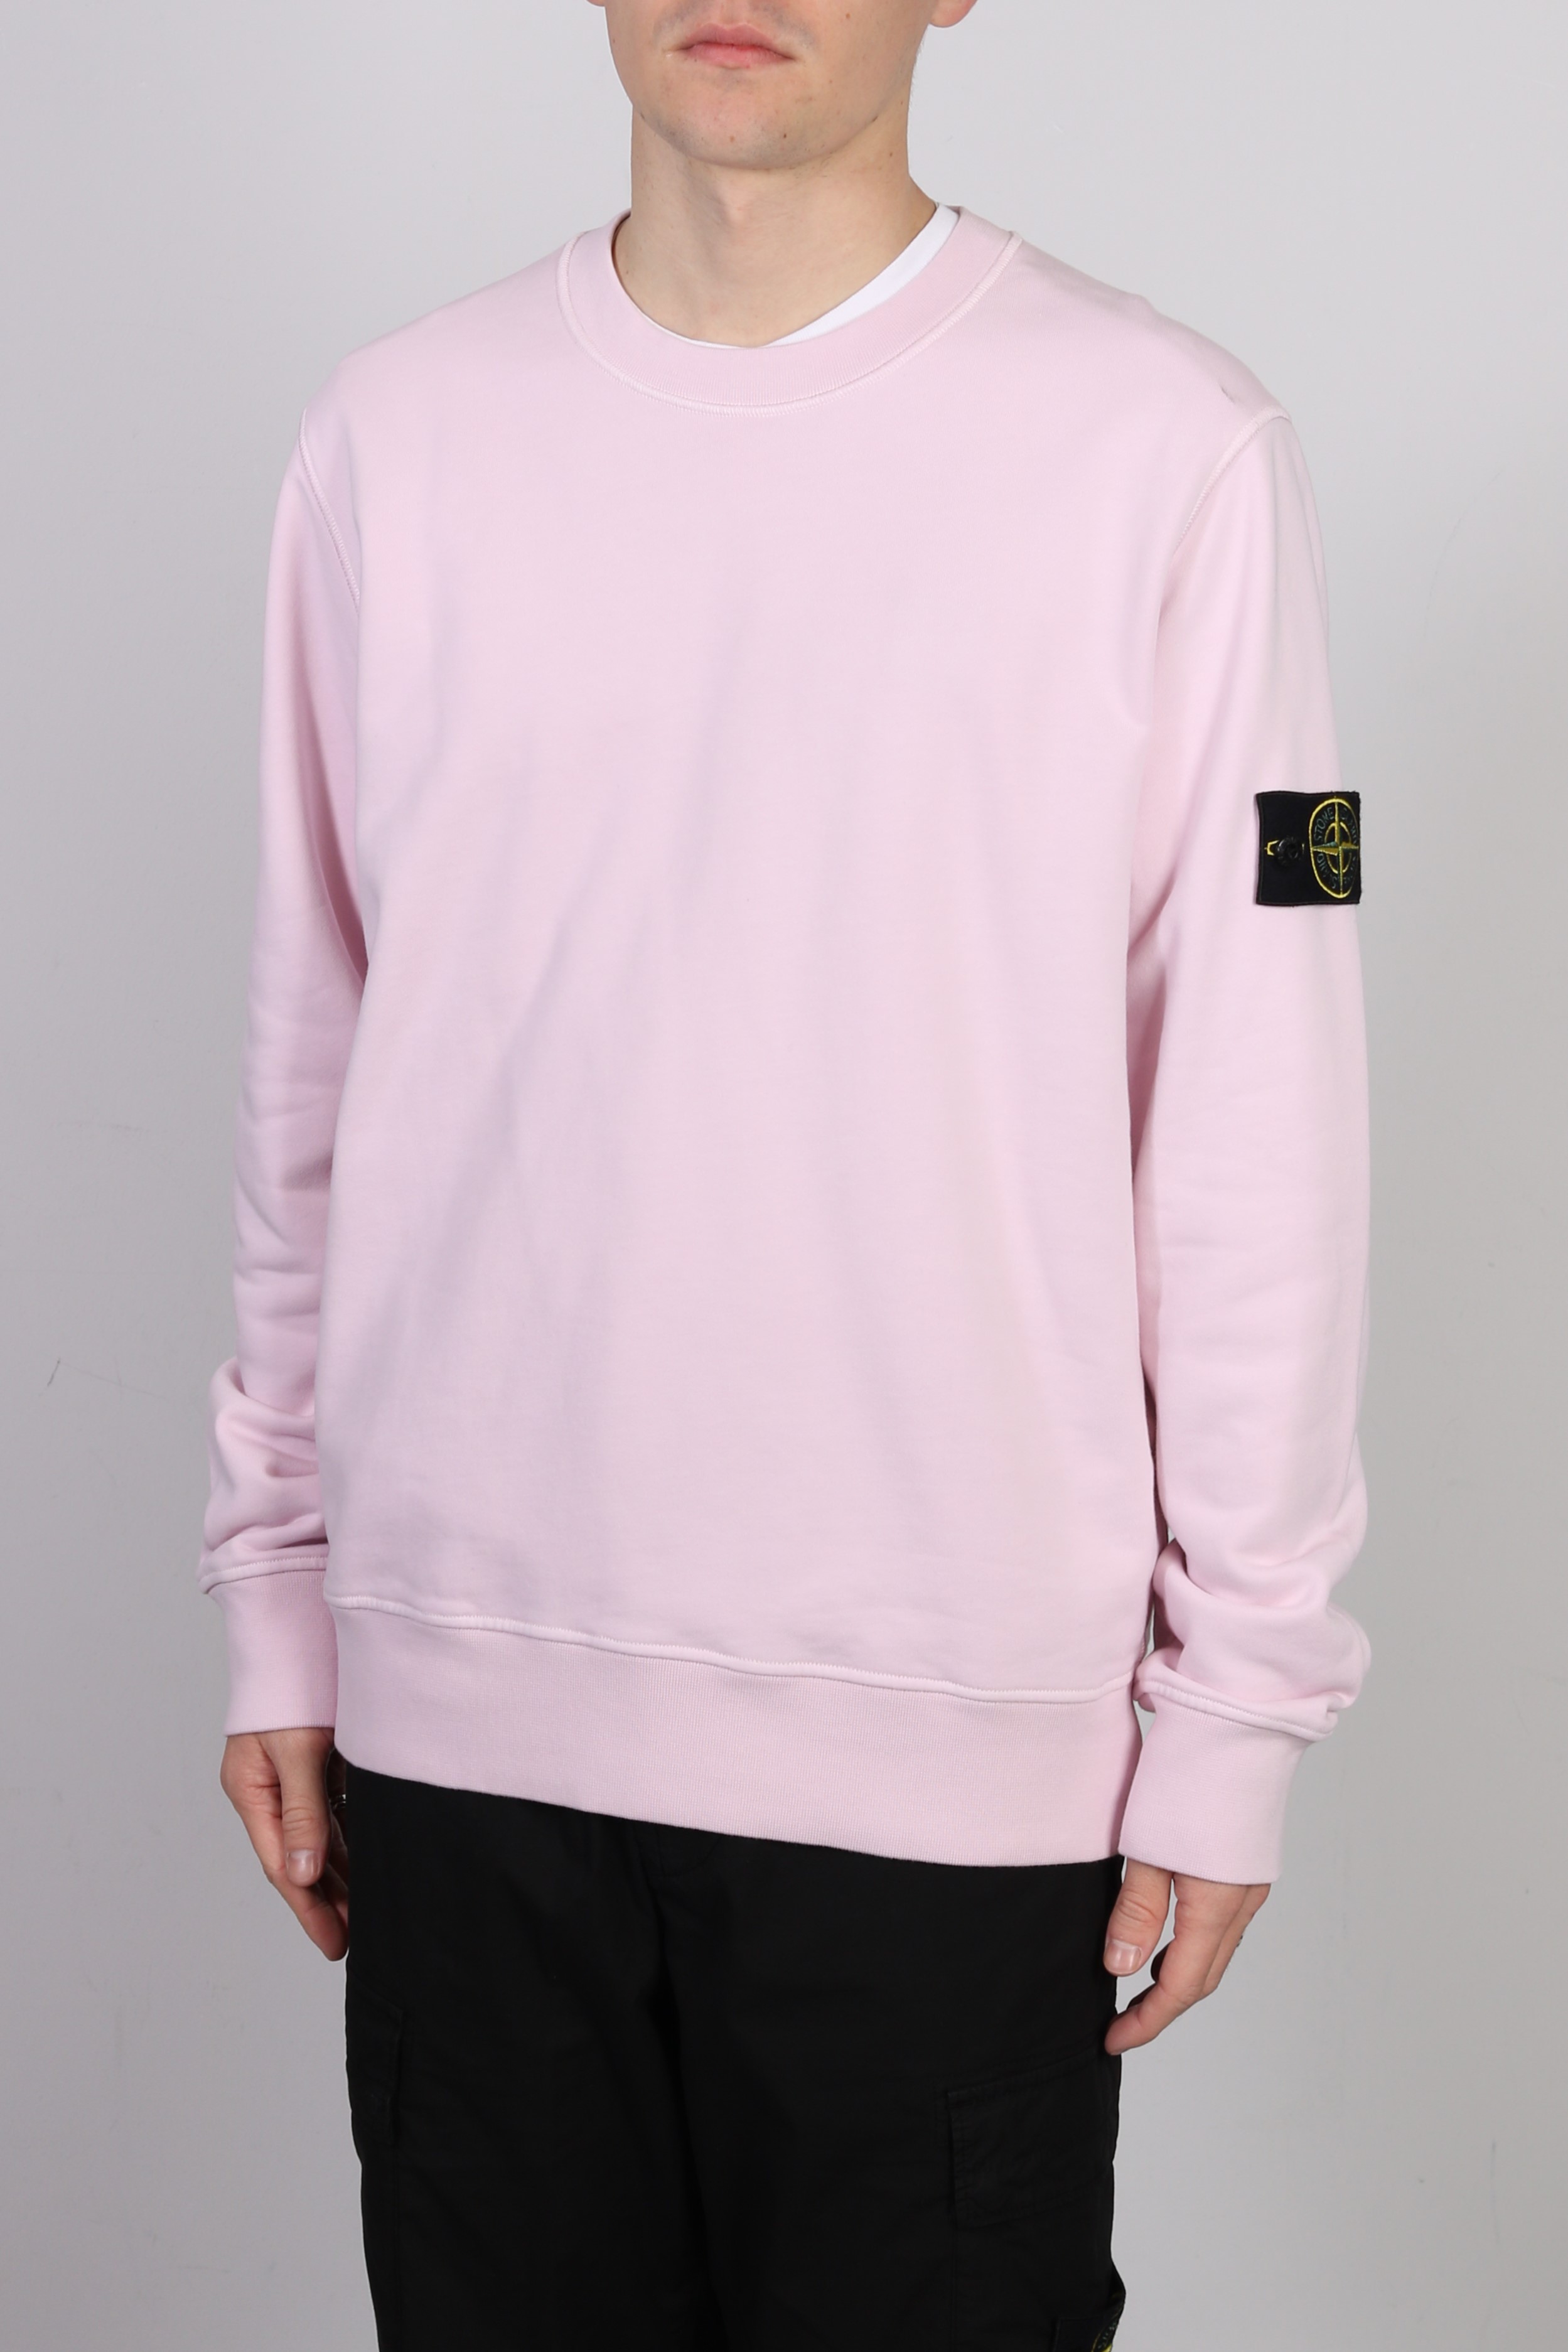 STONE ISLAND Sweatshirt in Light Pink 3XL